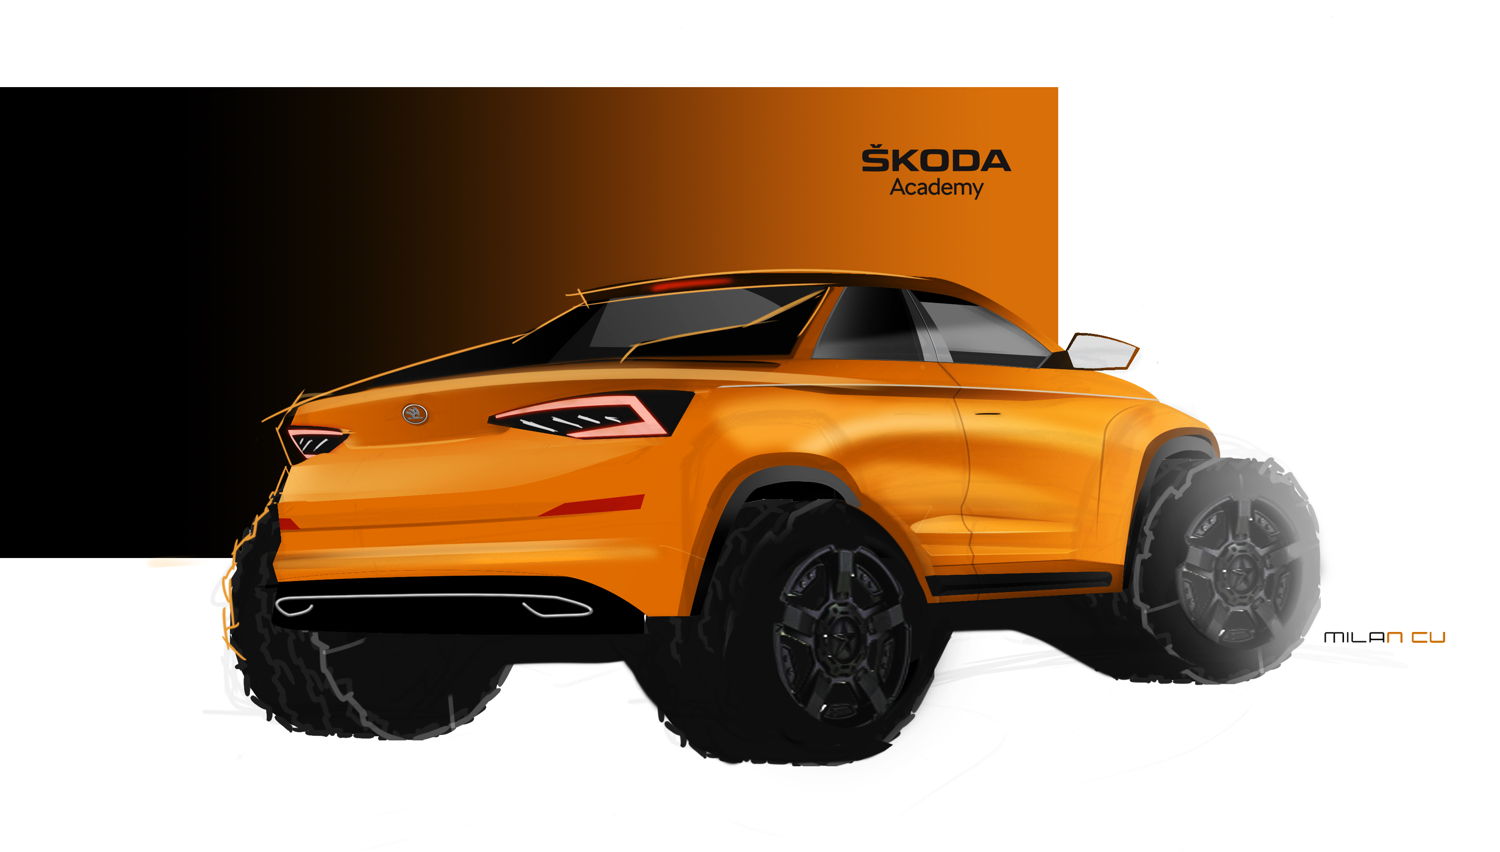 Massive wheels, sharp edges and sculptural surfaces define the pickup version of the ŠKODA KODIAQ, the 2019 ŠKODA Student Concept Car.